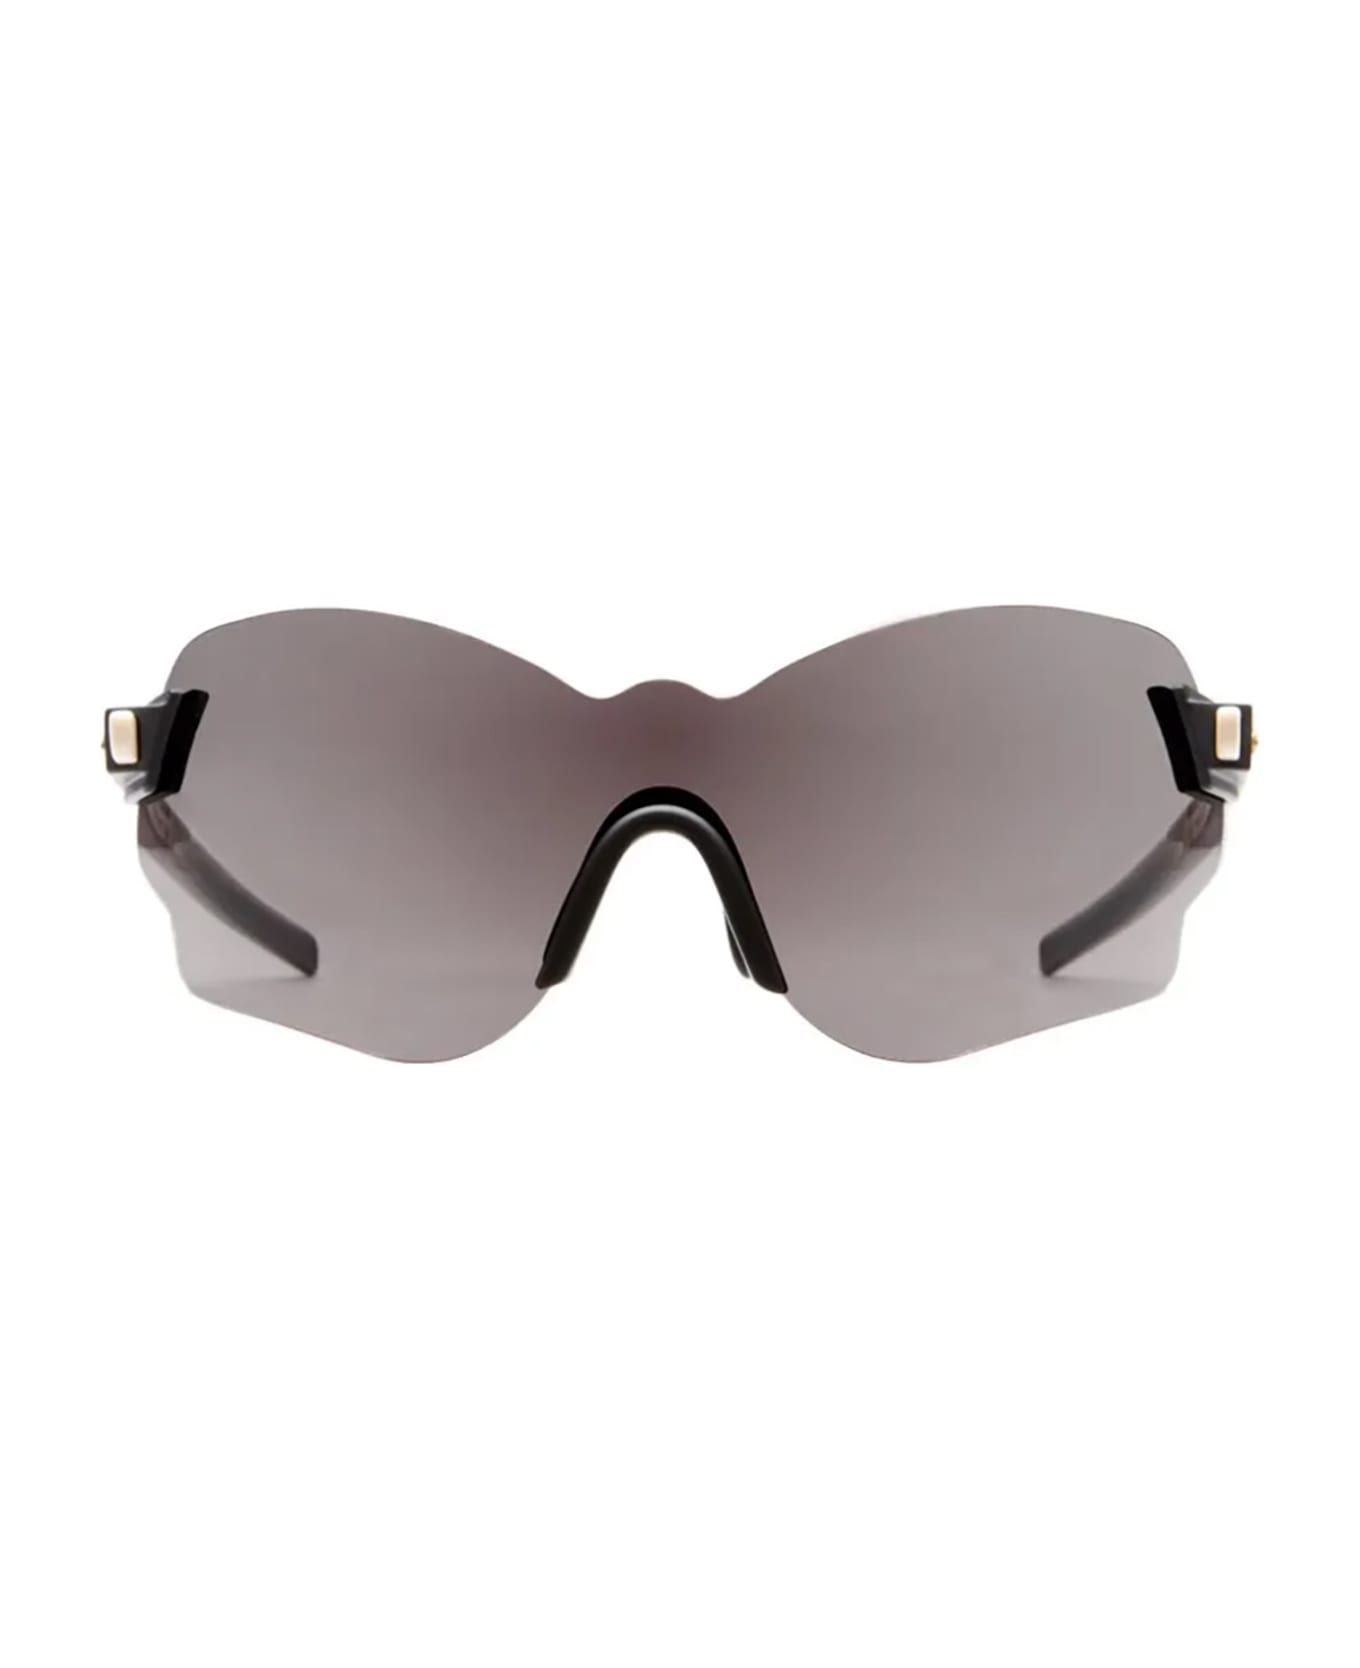 Kuboraum E51 Sunglasses - Brh Darkg サングラス